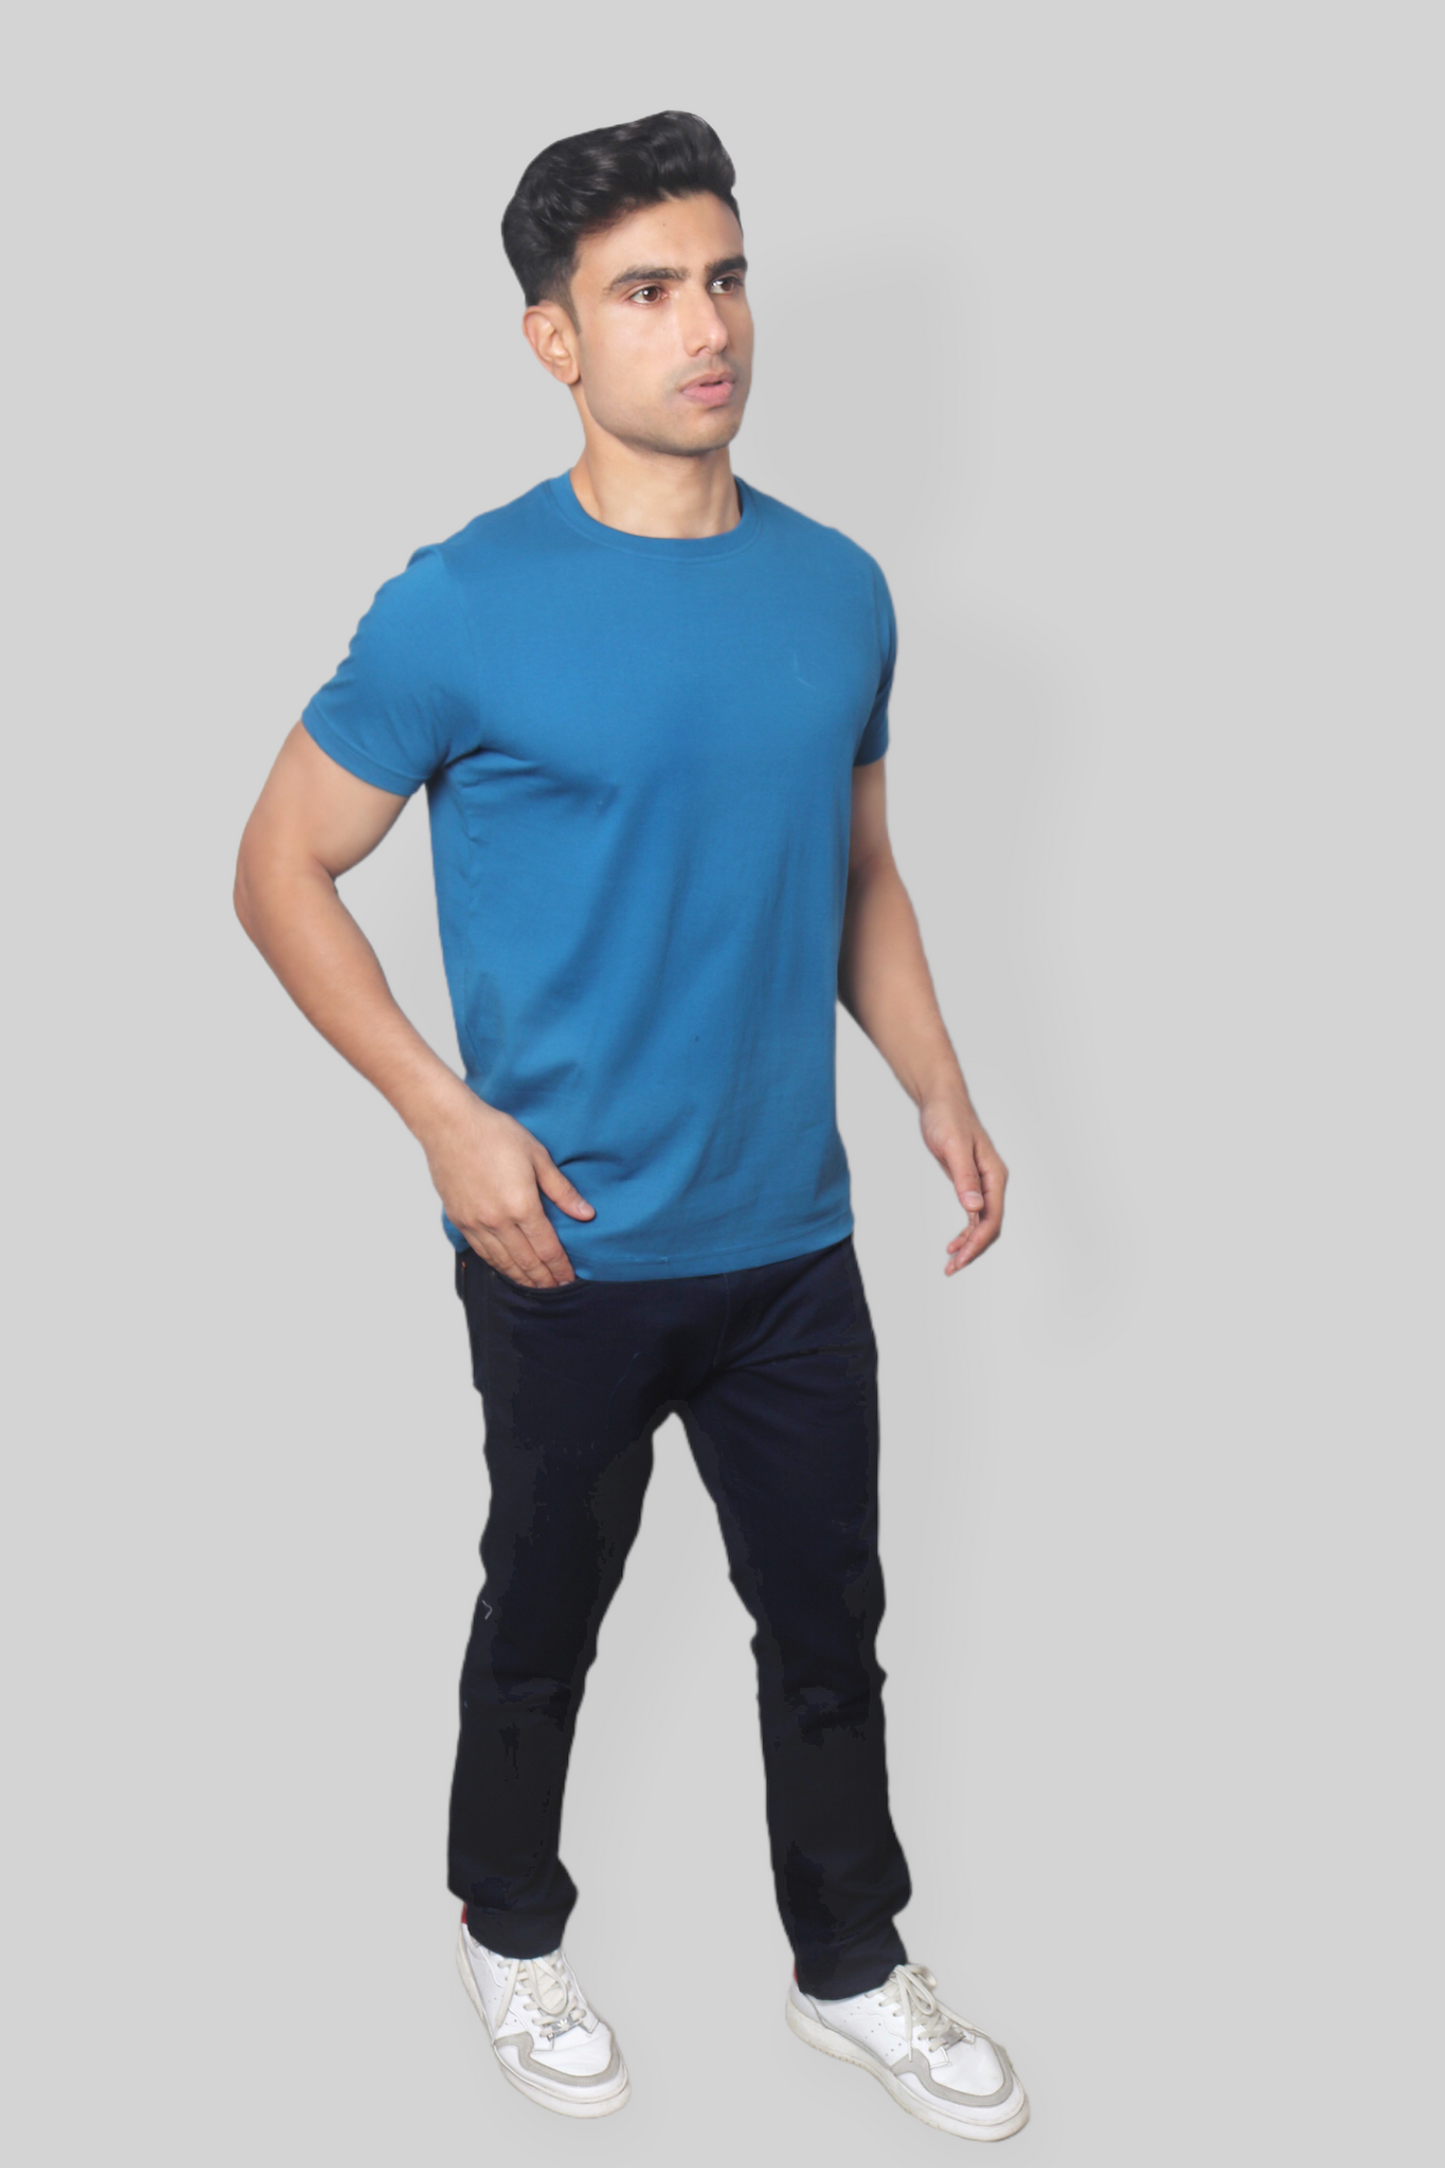 Solid Peacock Blue plain Round Neck Cotton Tshirt for men